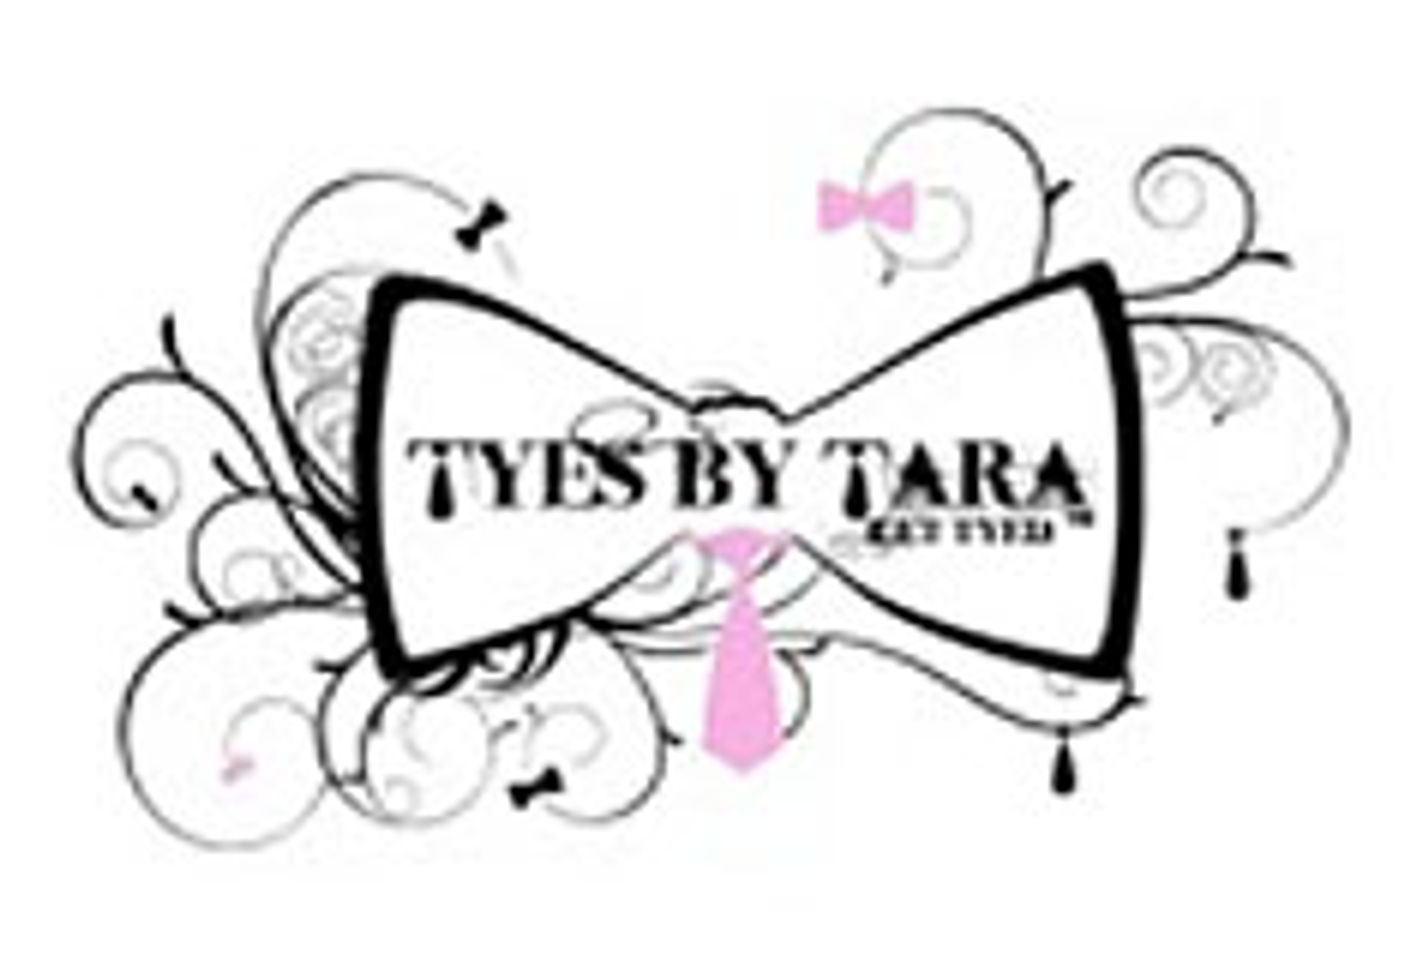 tyes.by.tara Releases Entyece Line